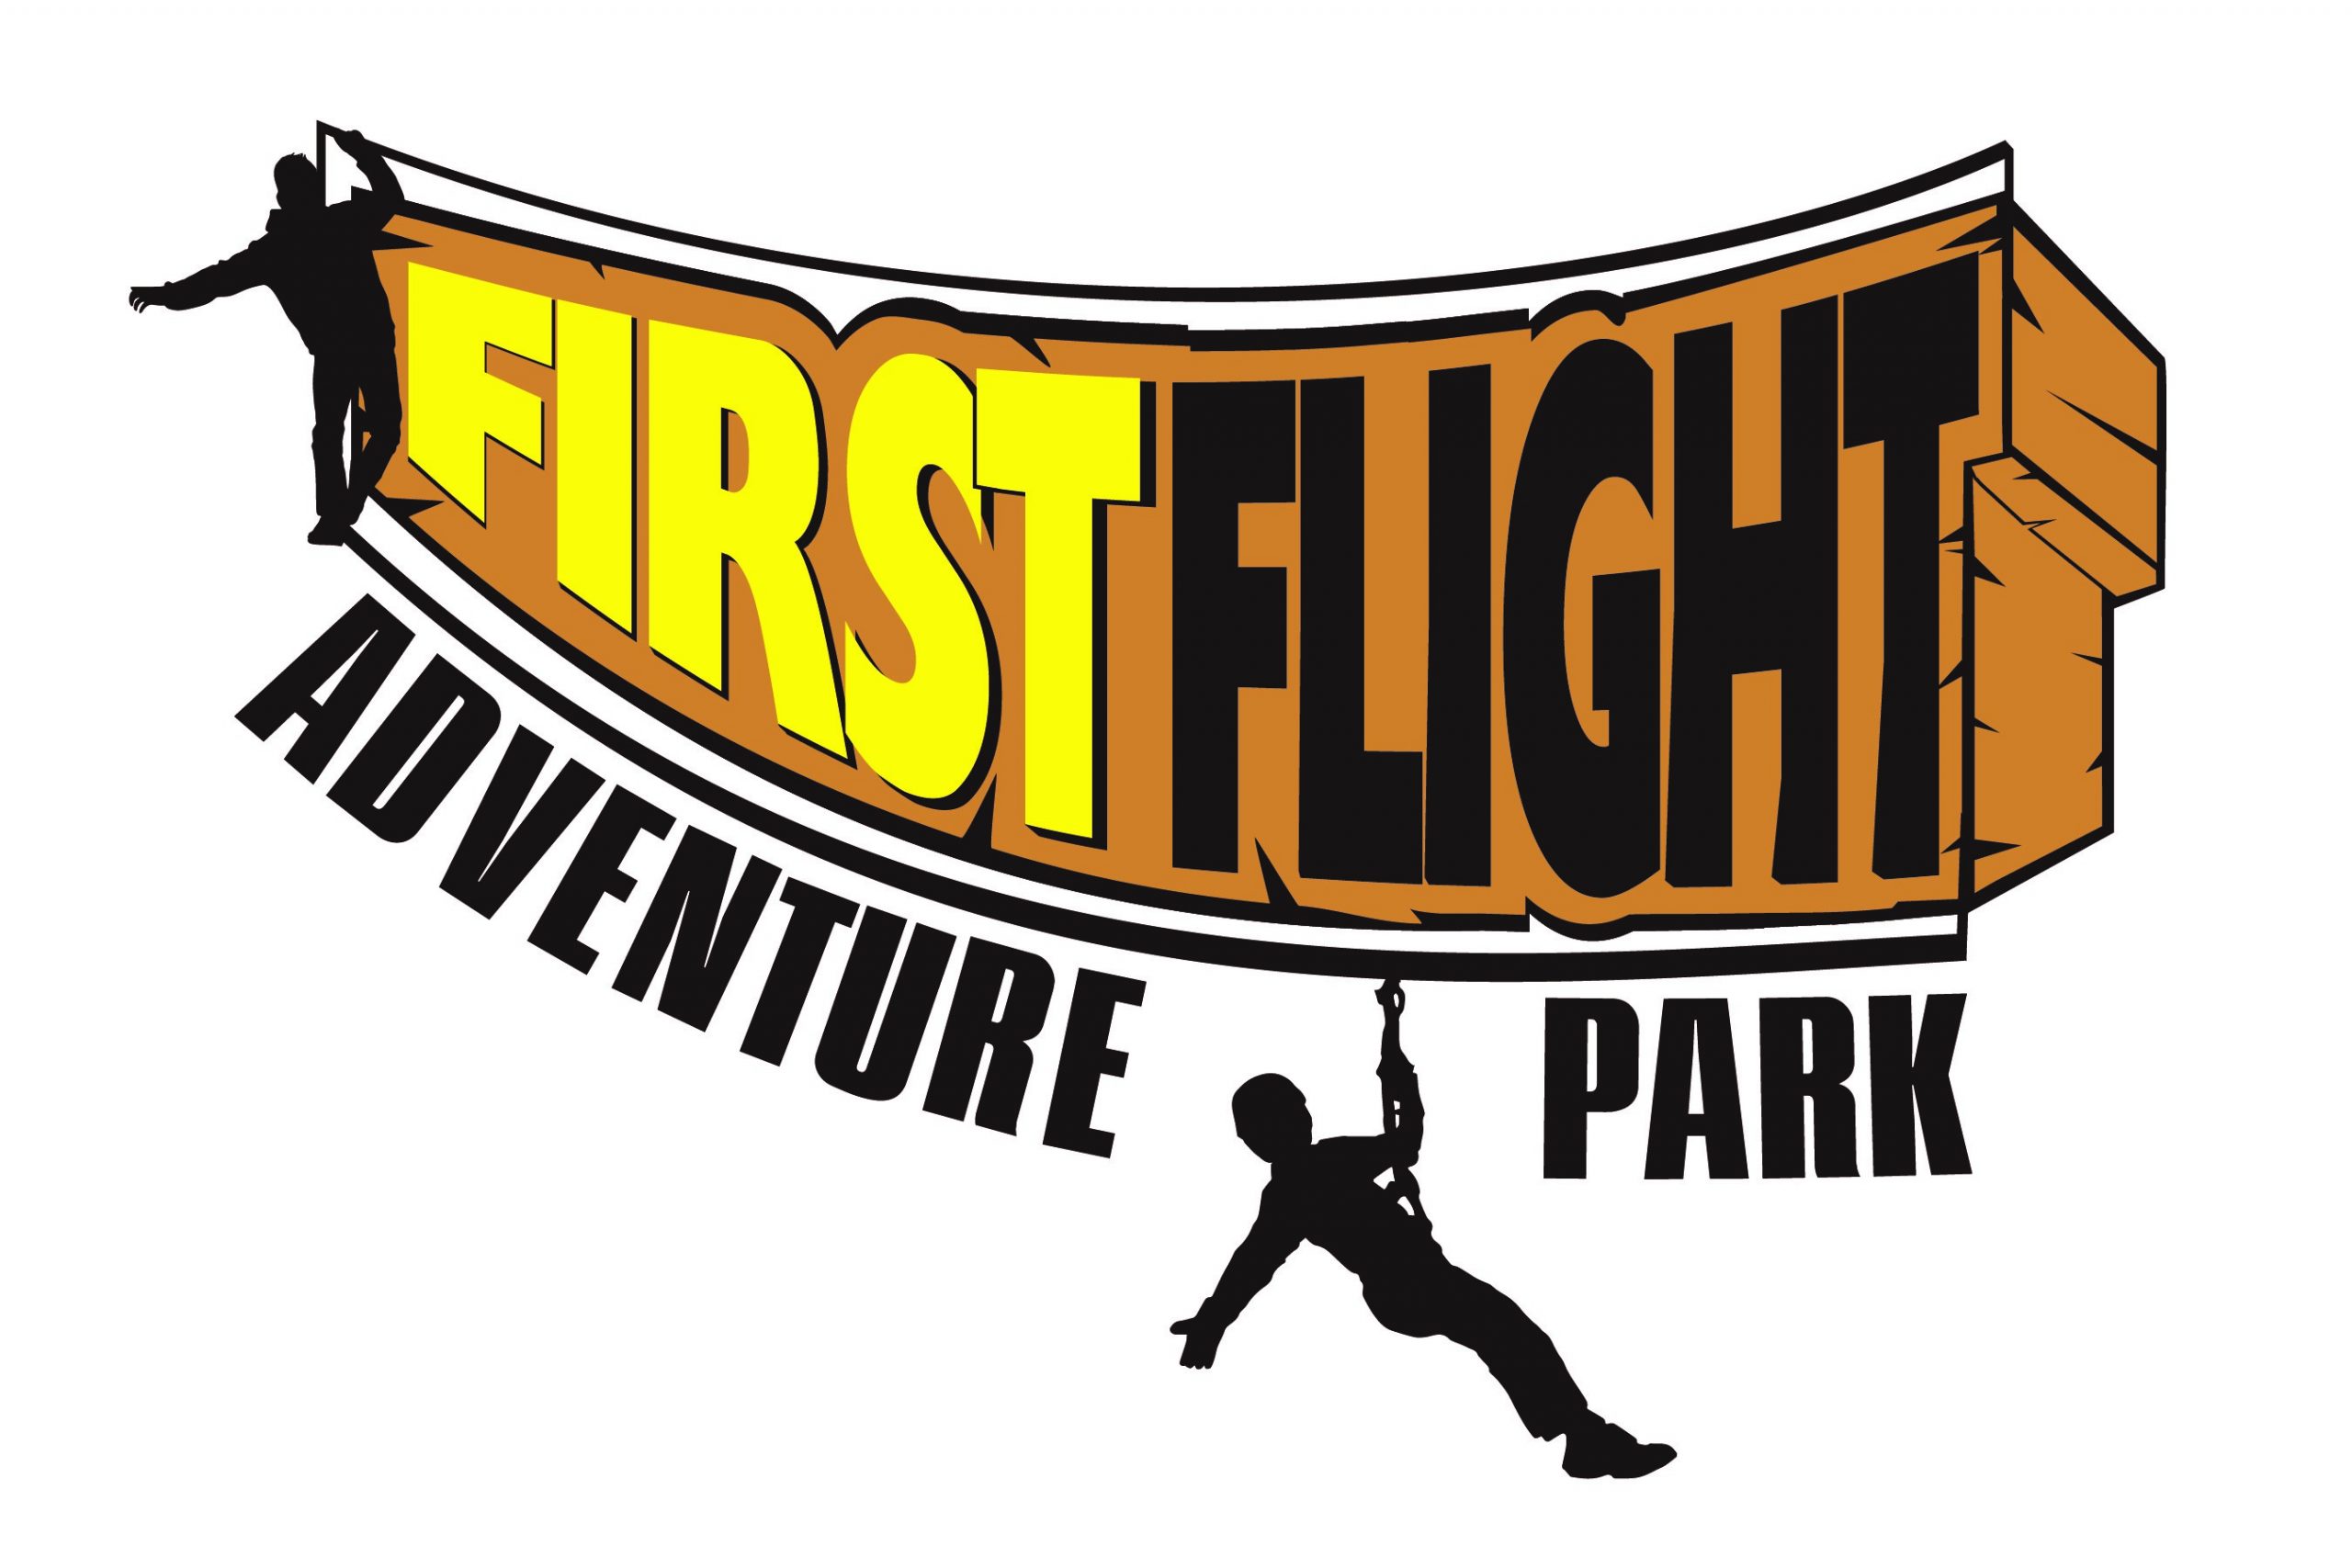 First Flight Adventure Park